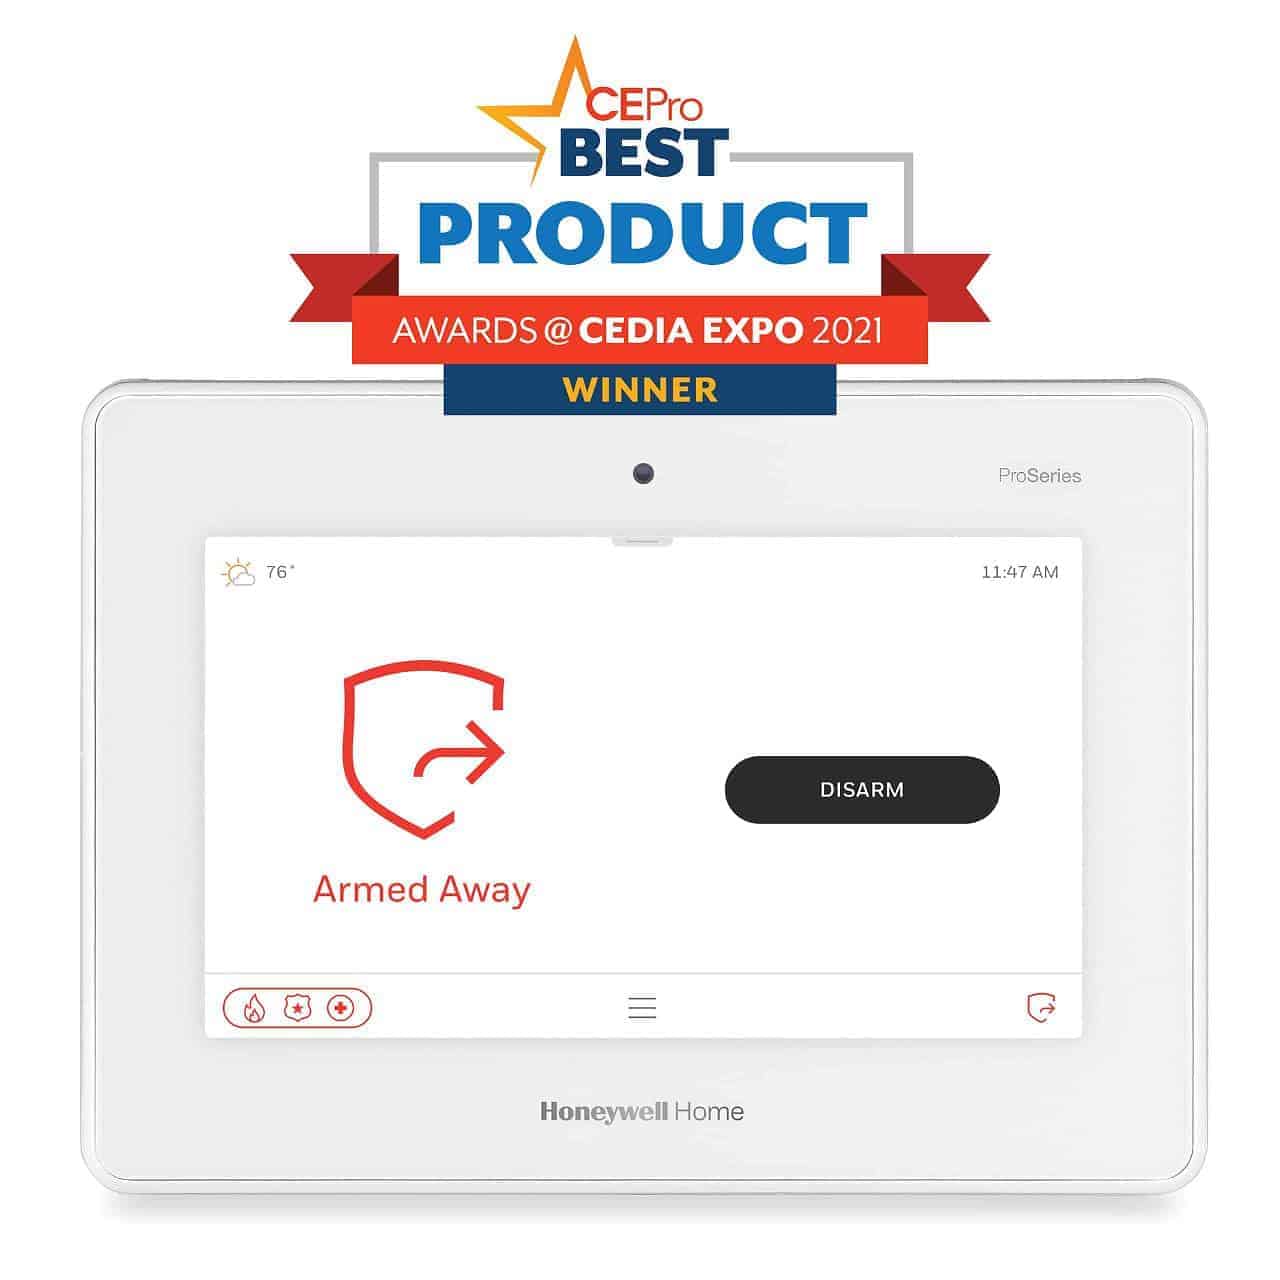 CEPro Best Product winner Resideo ProSeries